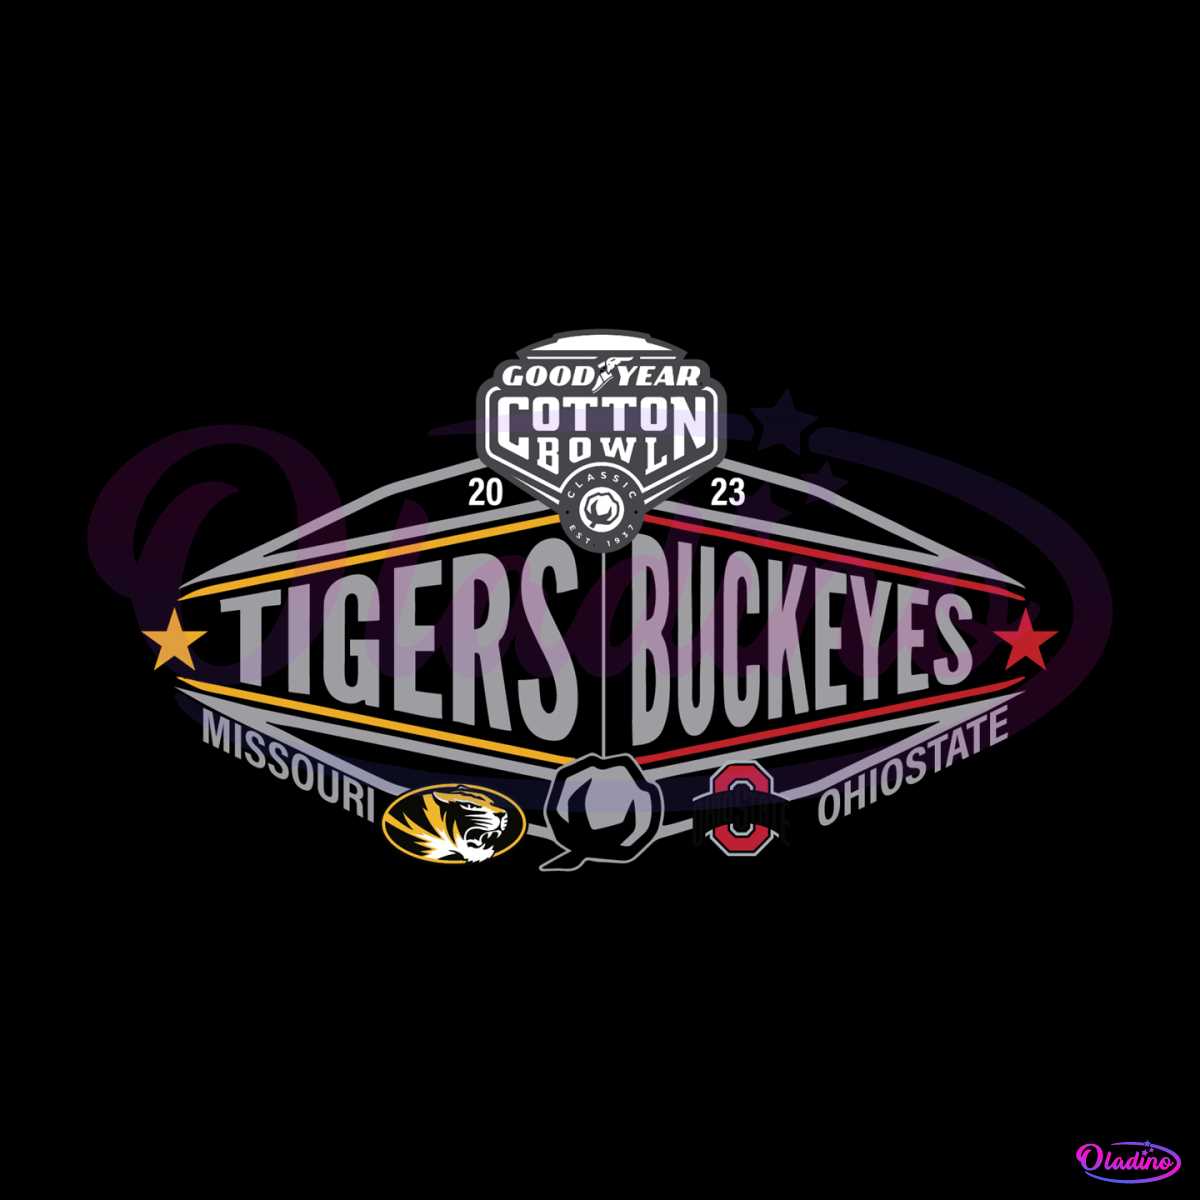 Cotton Bowl Tigers vs Buckeyes Football SVG - Missouri Tigers SVG